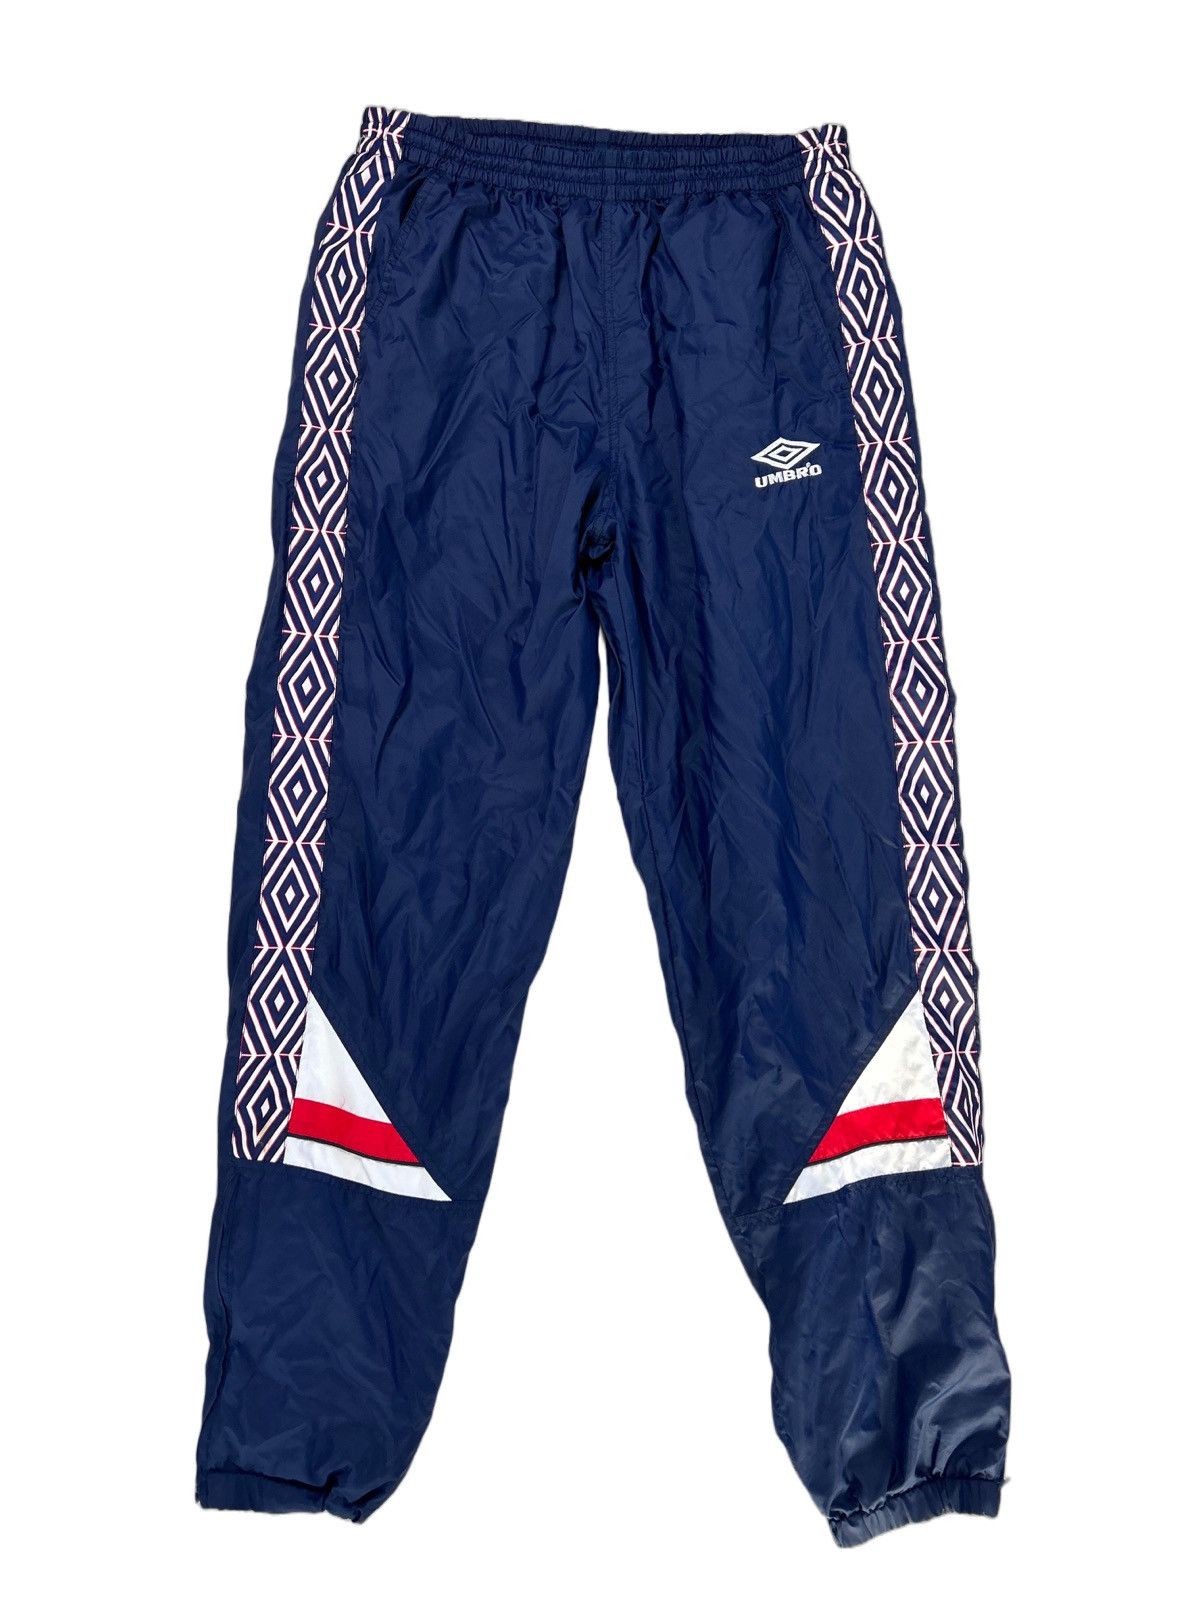 Vintage Umbro nylon track pants vintage navy red side stripe PSG